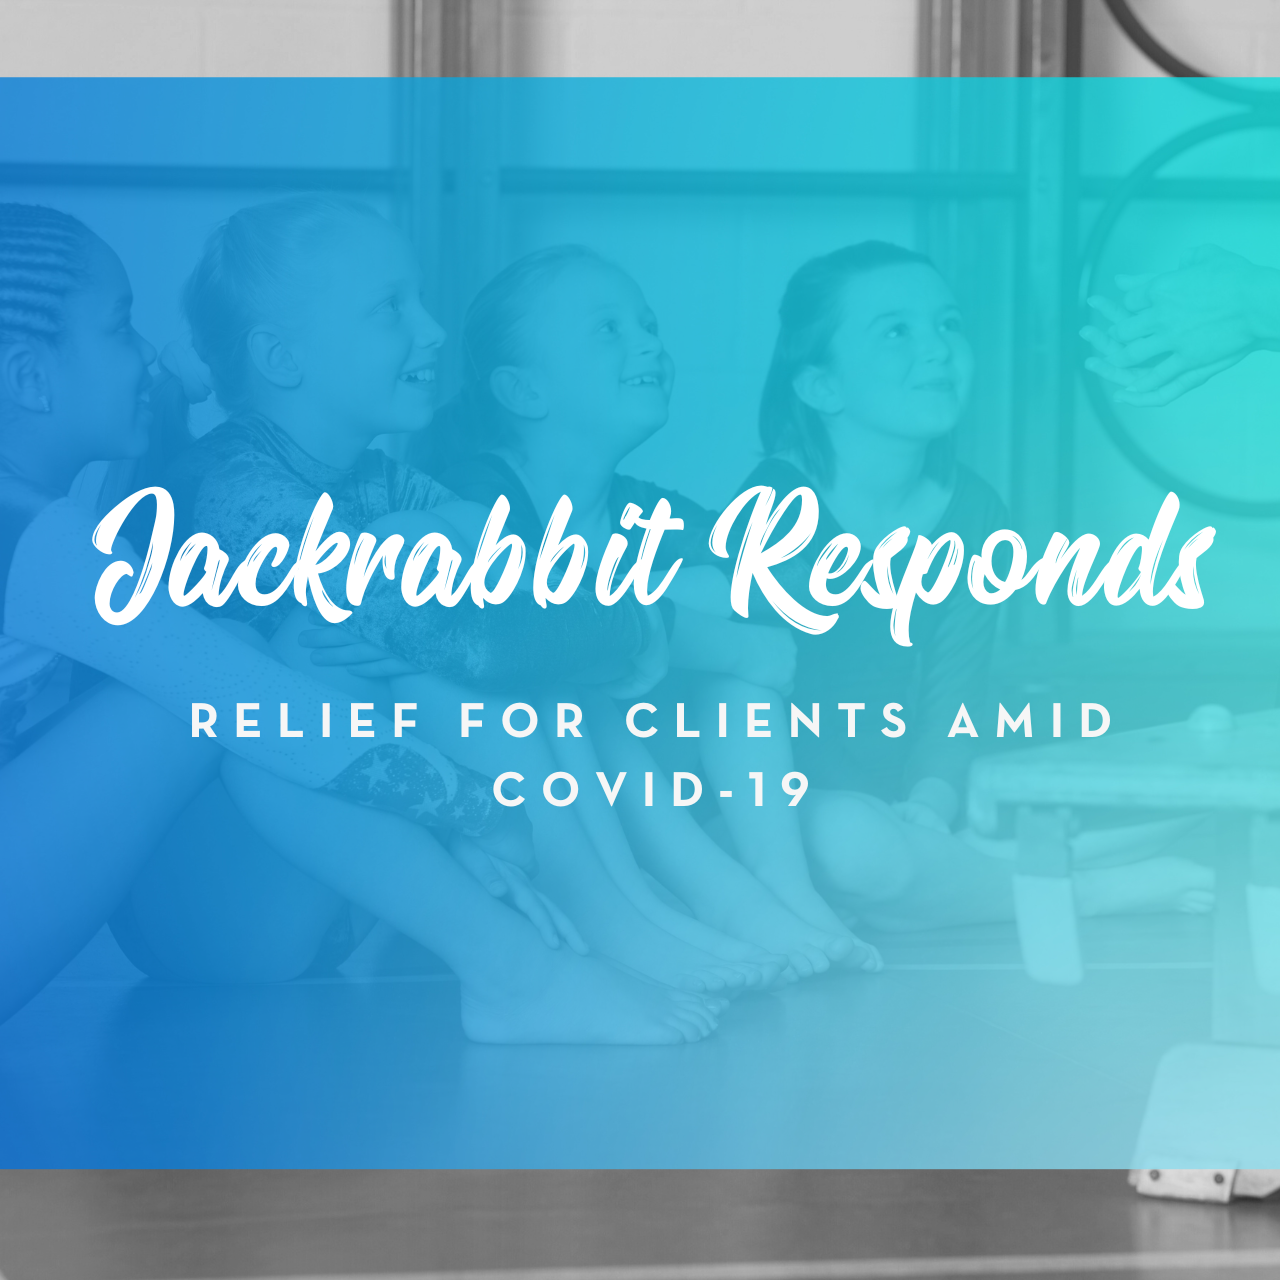 Jackrabbit Provides Relief for Clients Amid COVID-19 Crisis